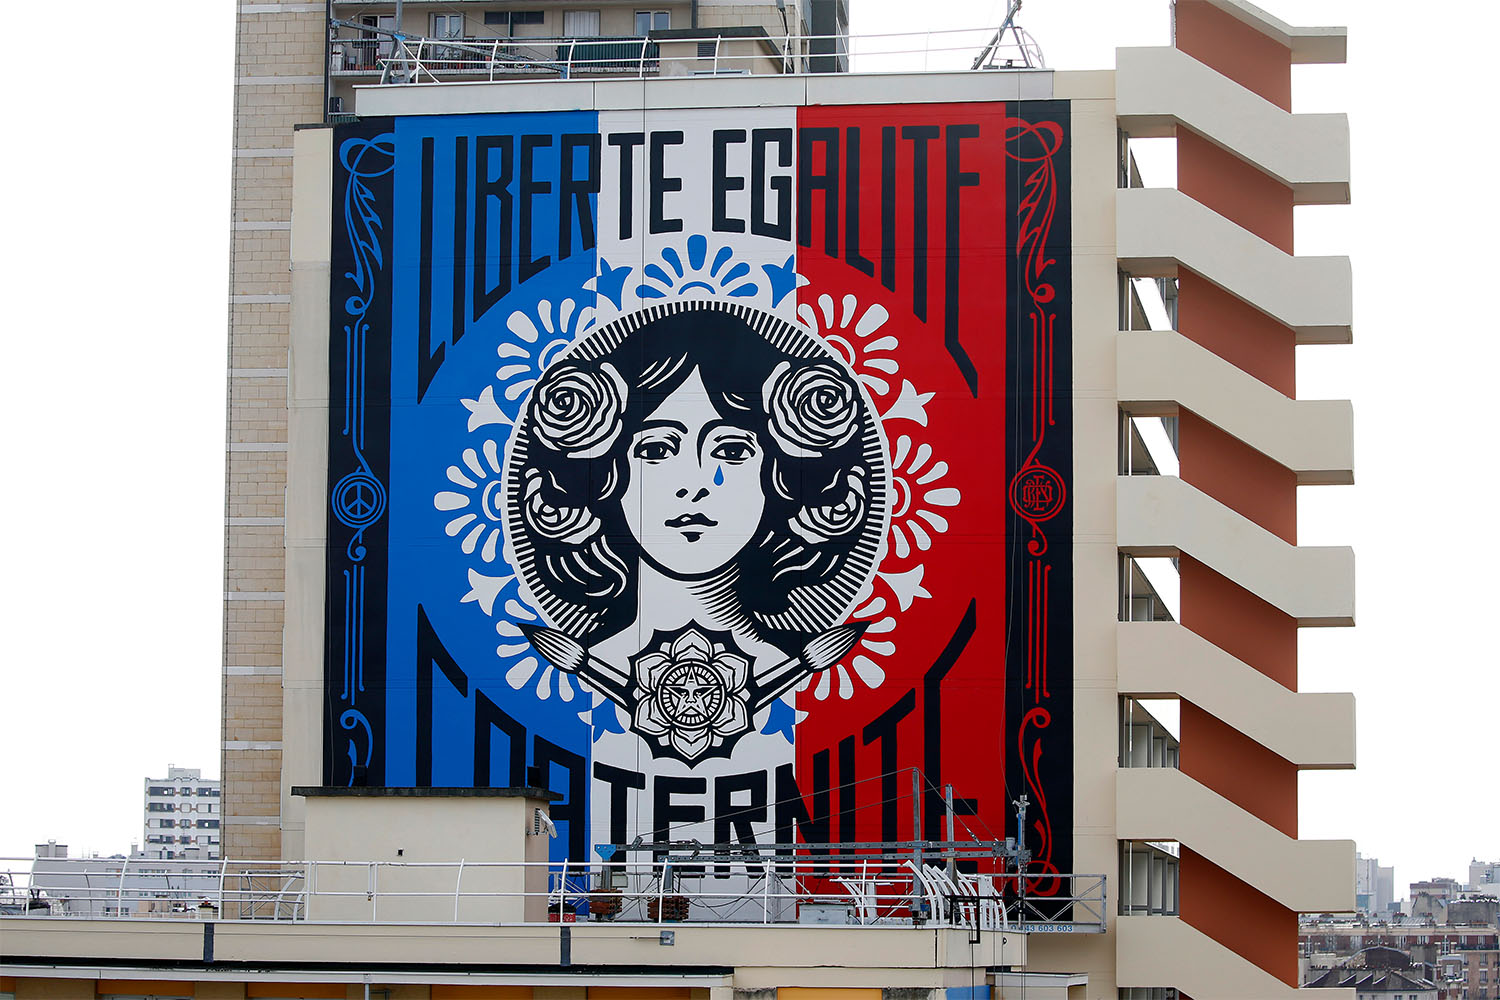 Shepard Fairey's "Marianne" mural in Paris, France